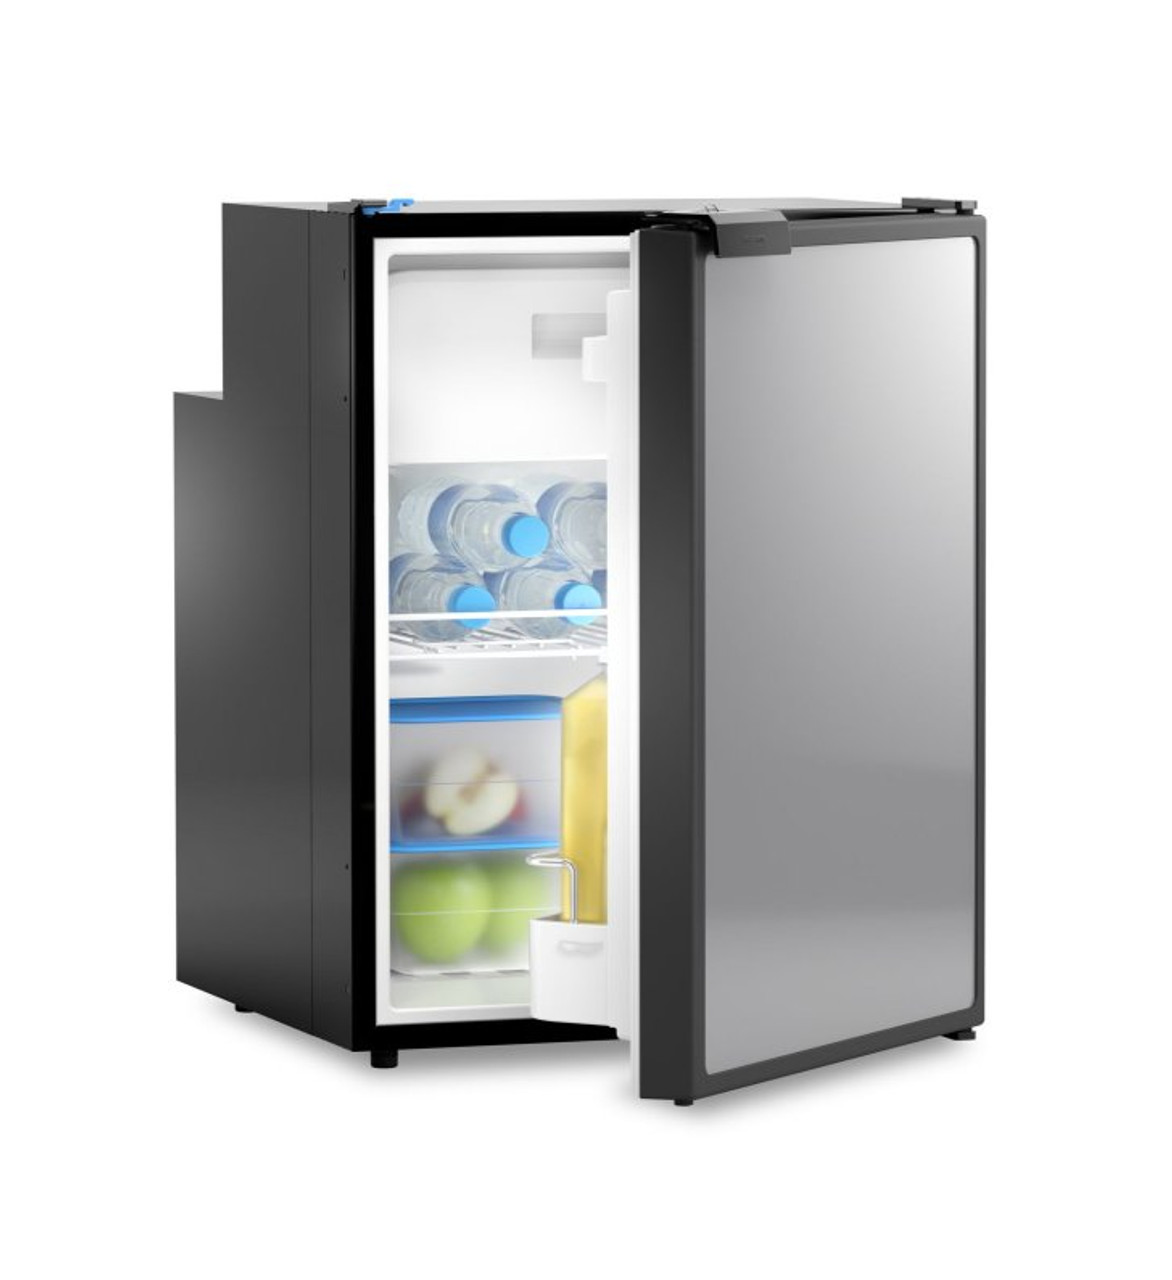 22+ Dometic fridge freezer motorhome manual ideas in 2021 